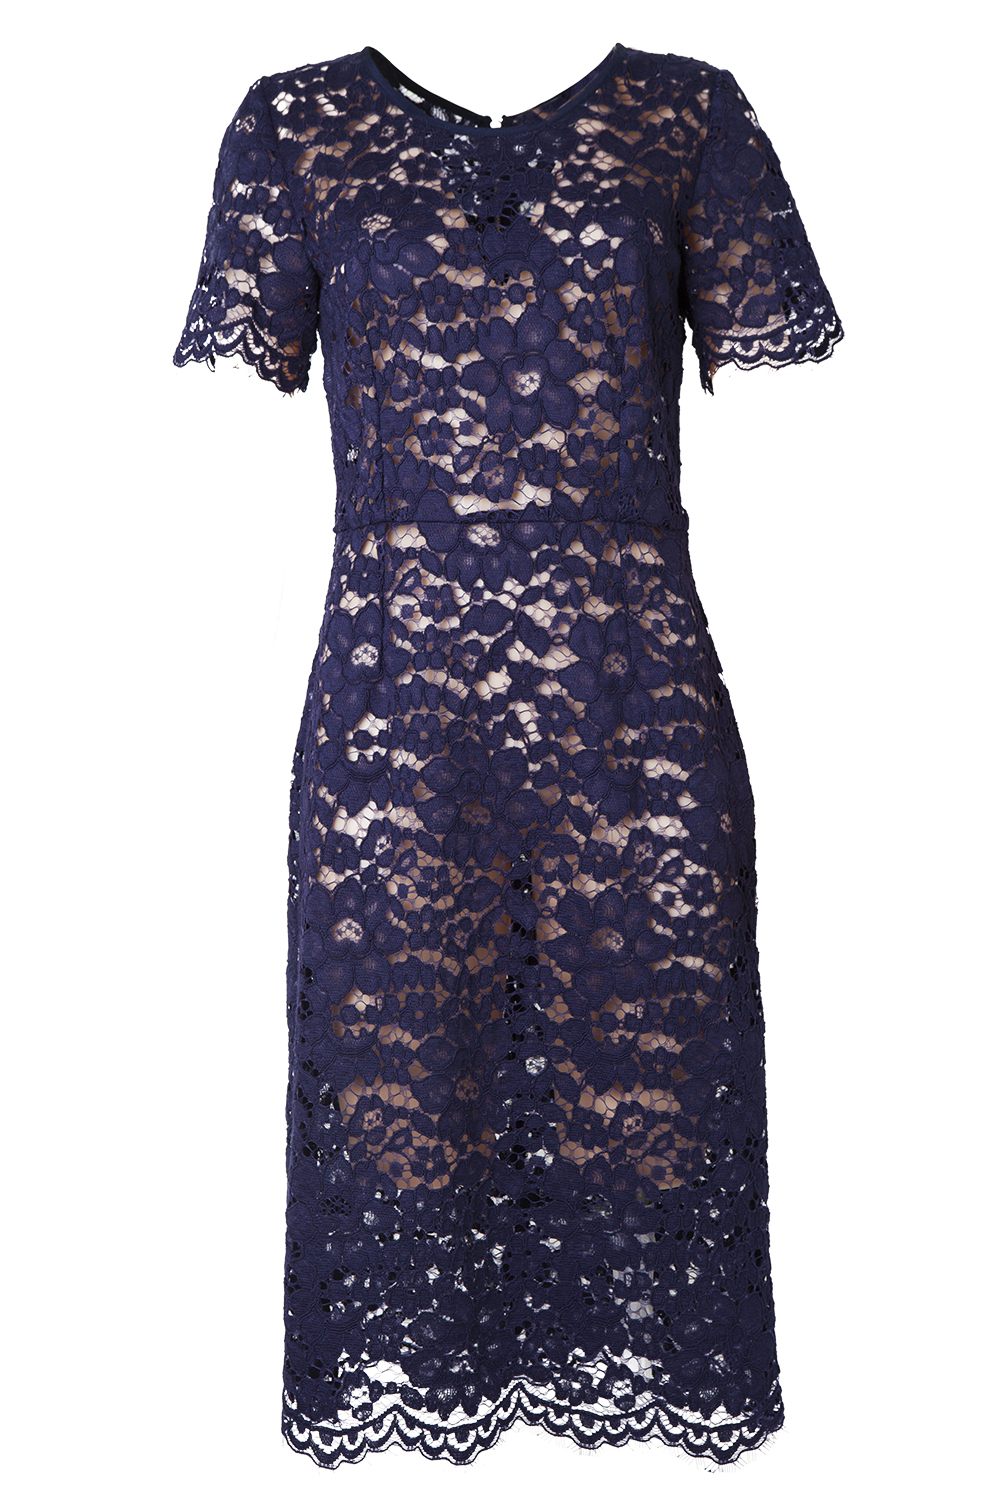 Dress, $379, by Charmaine Reveley.